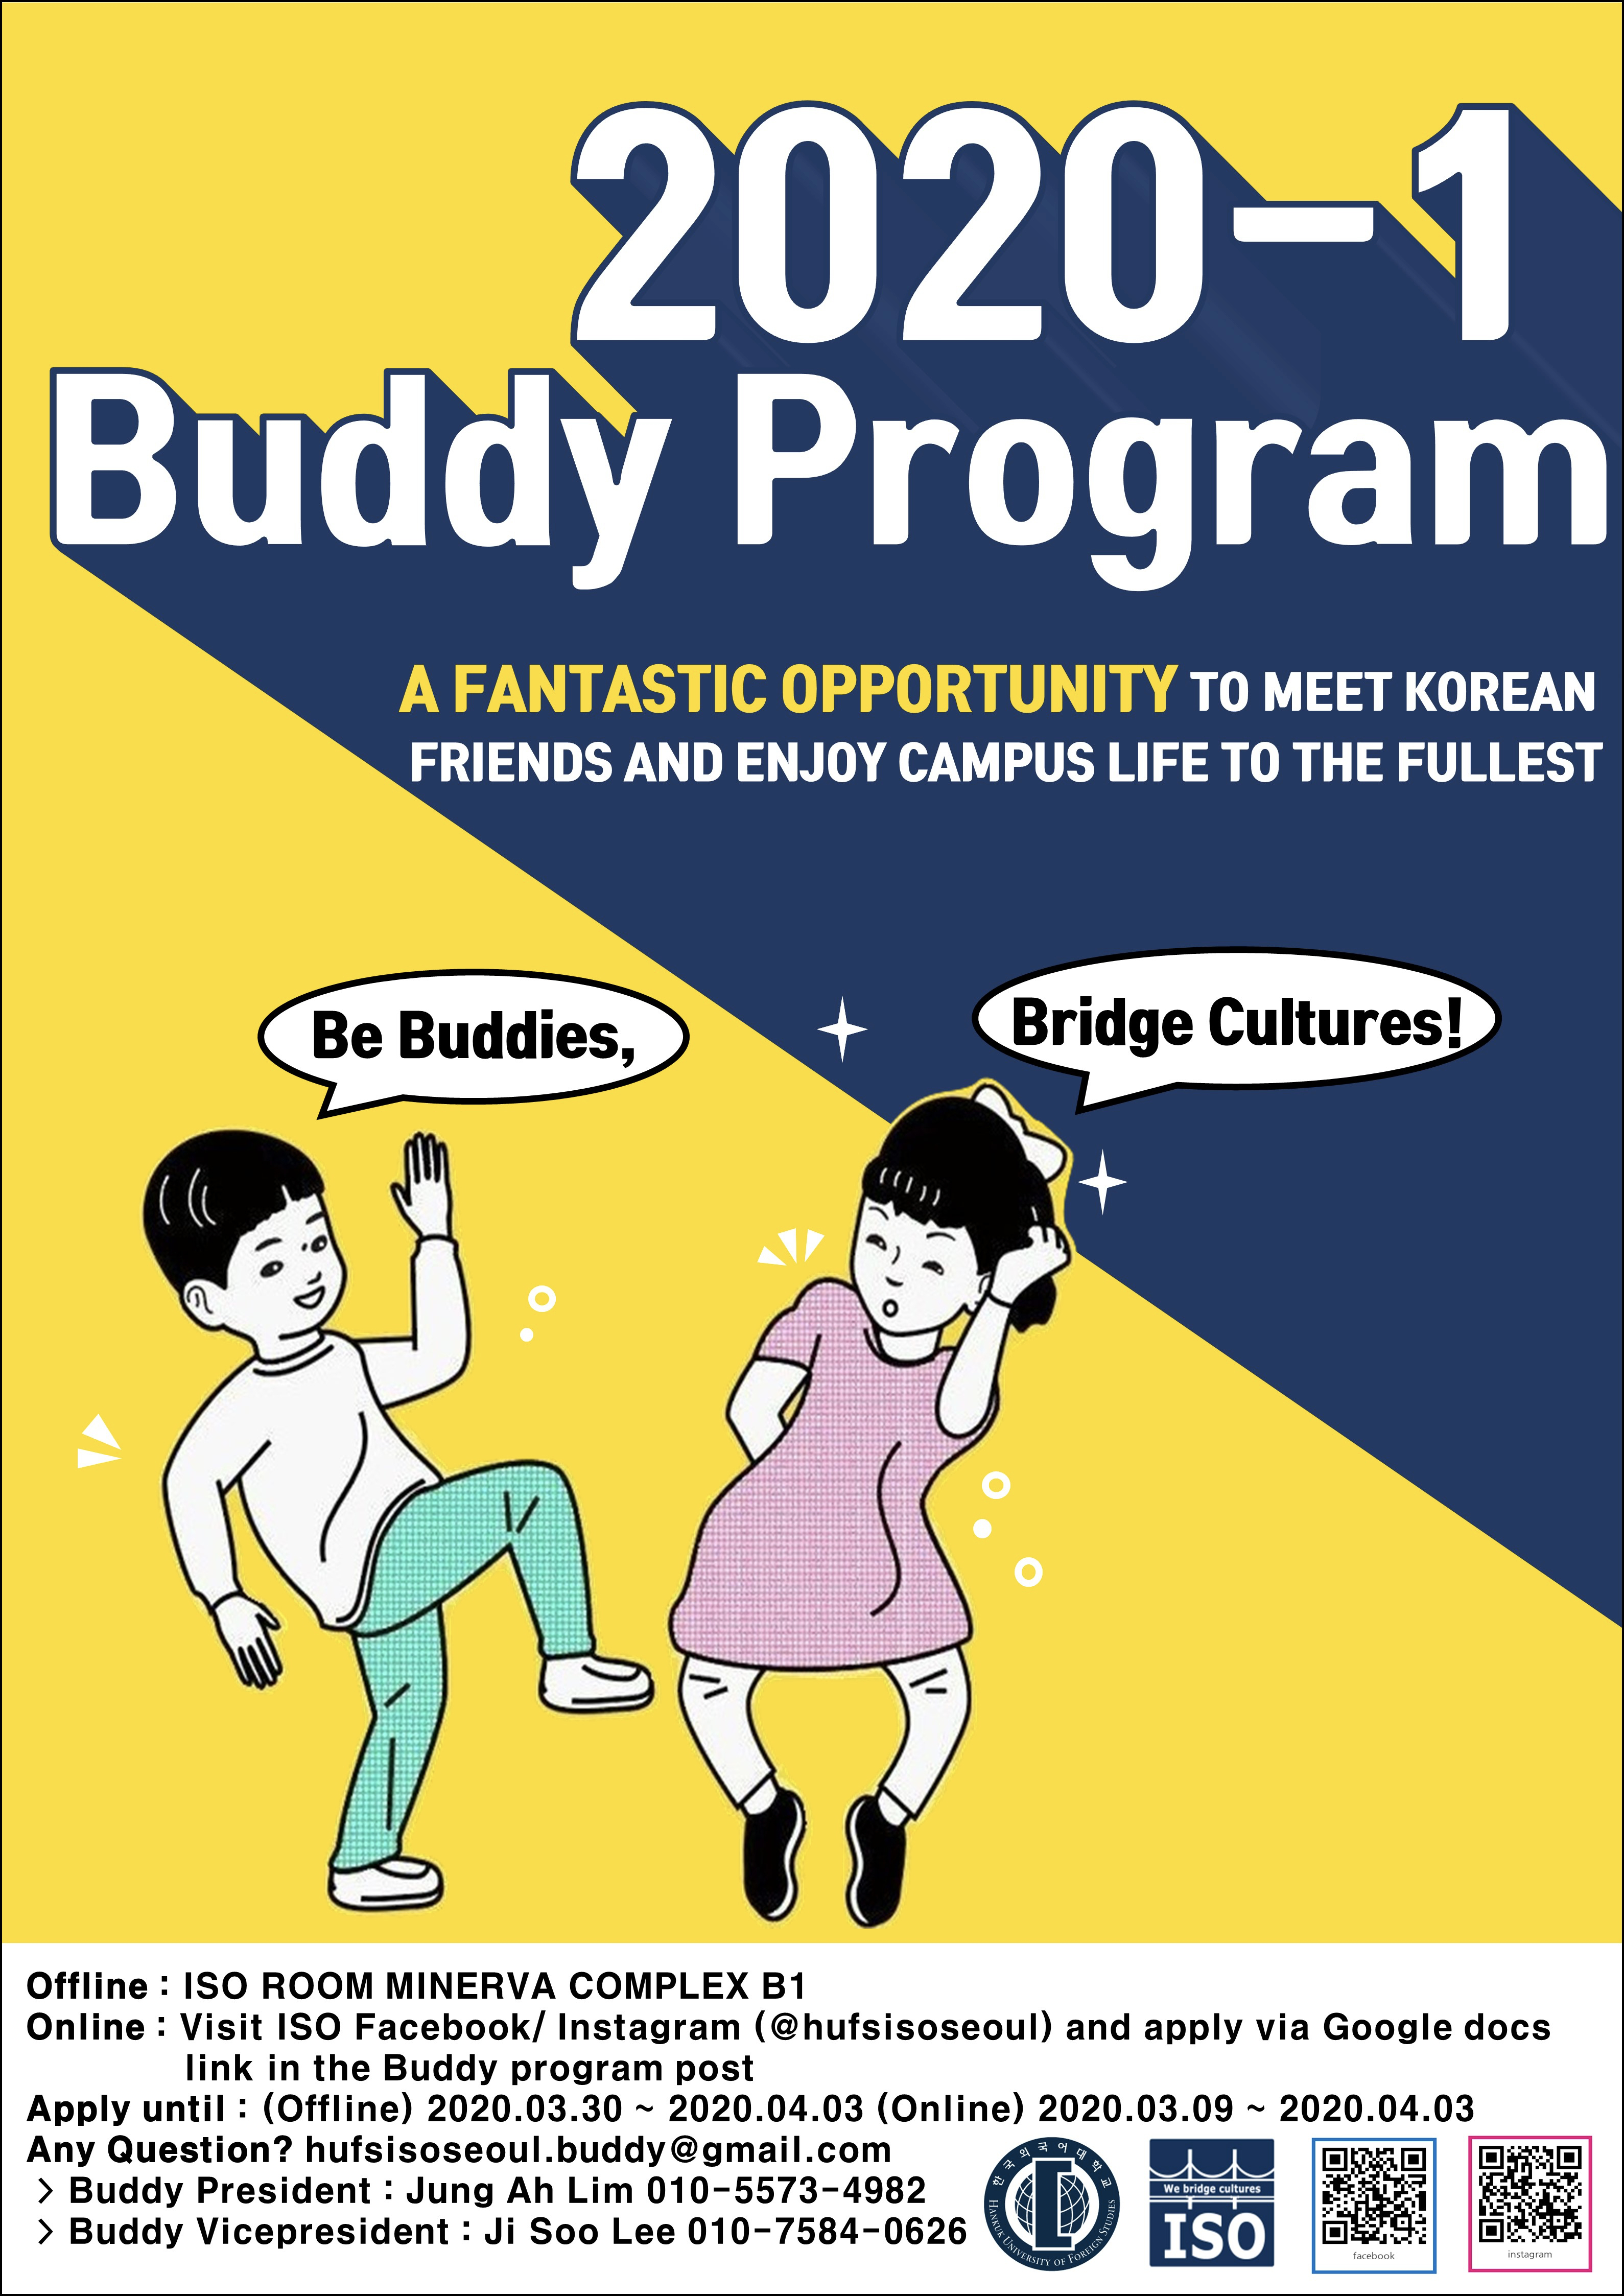 How to meet Korean friends online?